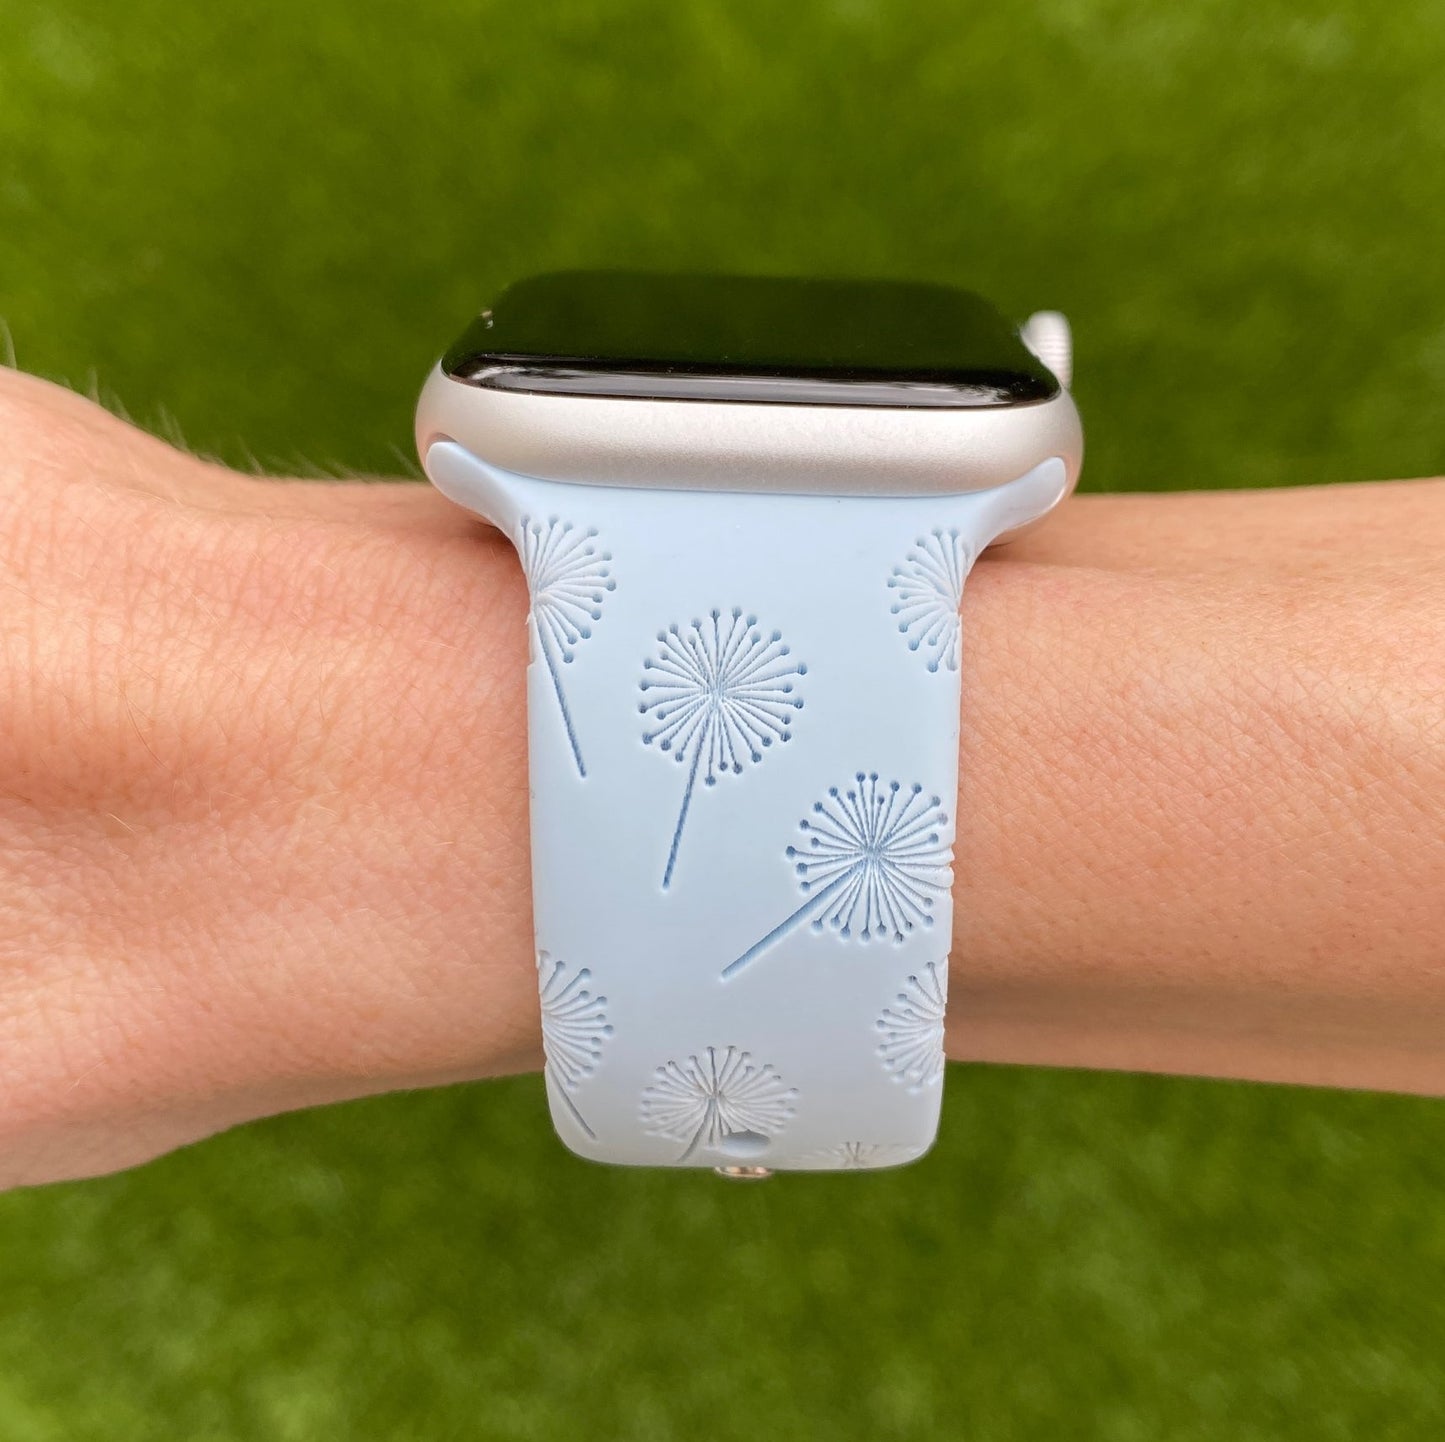 Dandelion Apple Watch Band